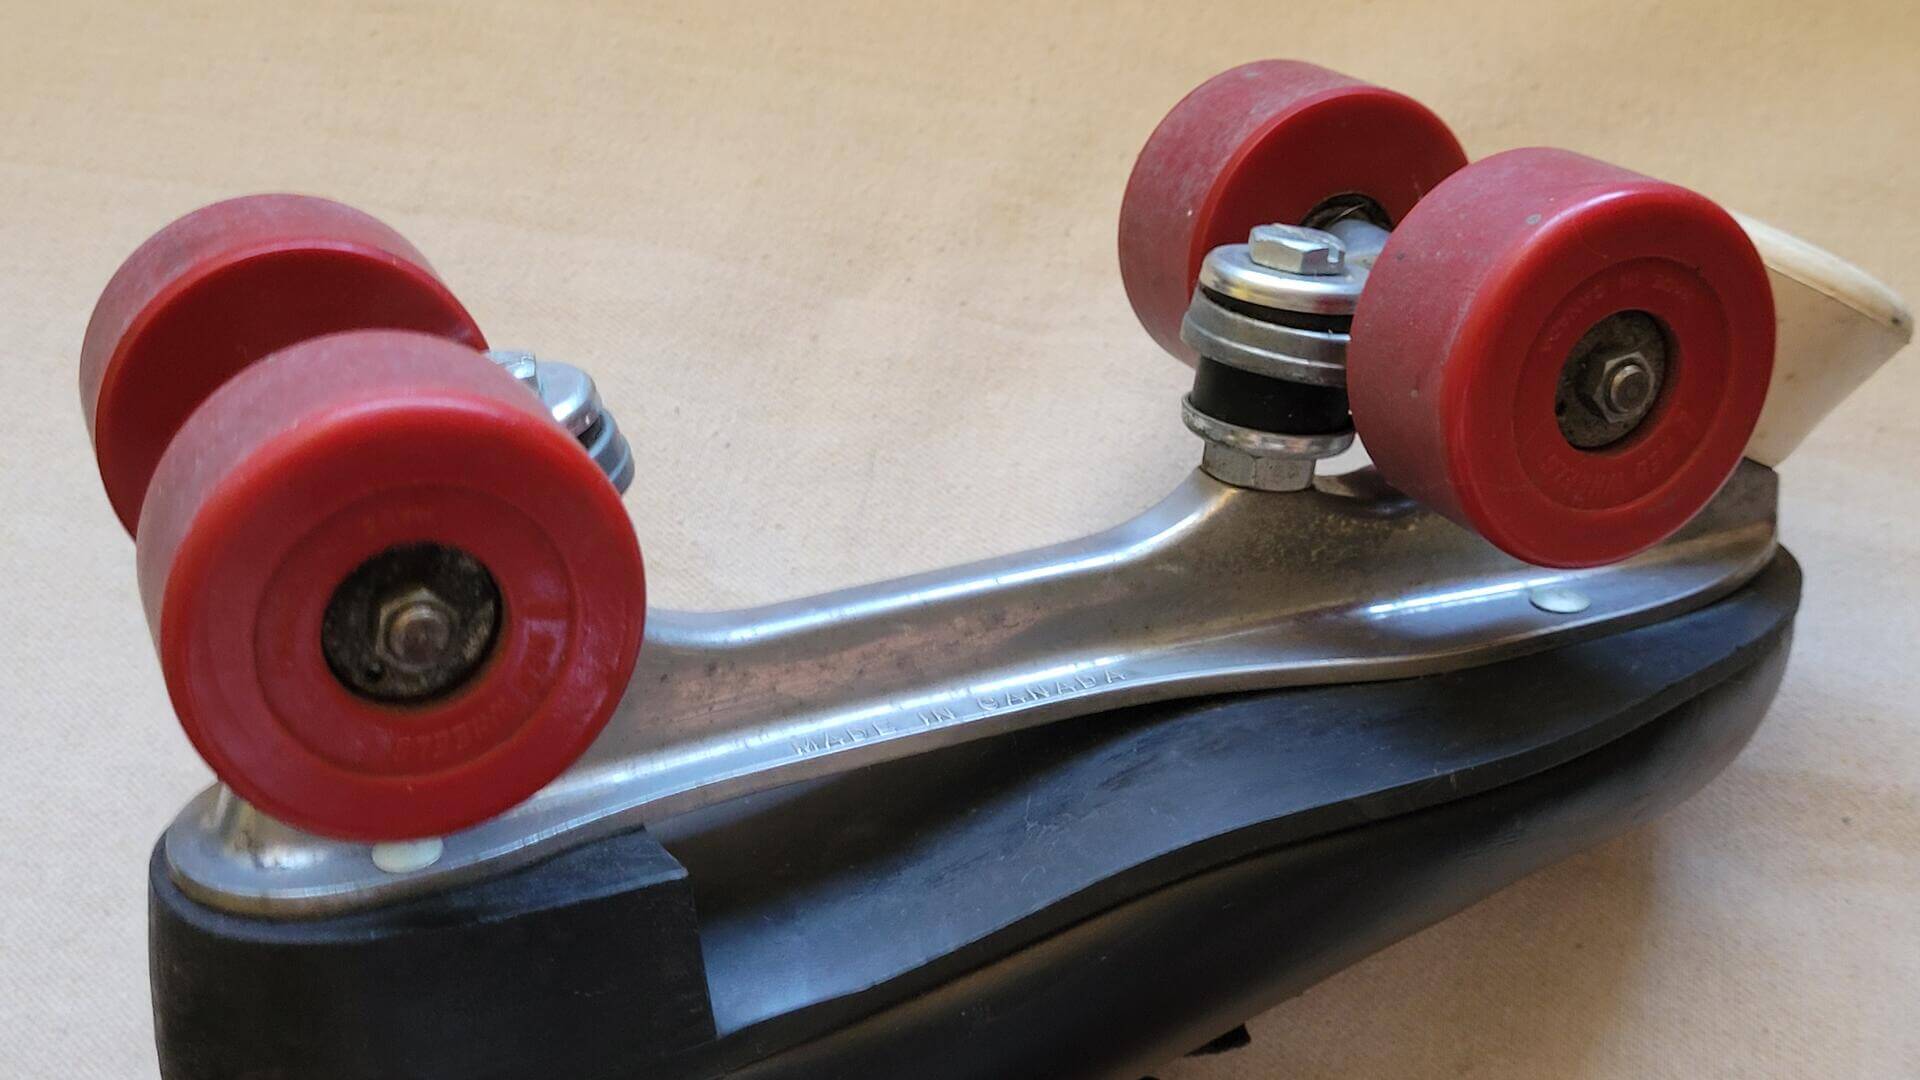 dominion-canada-marathon-rollers-skates-black-leather-red-wheels-cast=aluminum-frame-rare-vintage-canadiana-sports-equipment-and-memorabilia-wheels-view